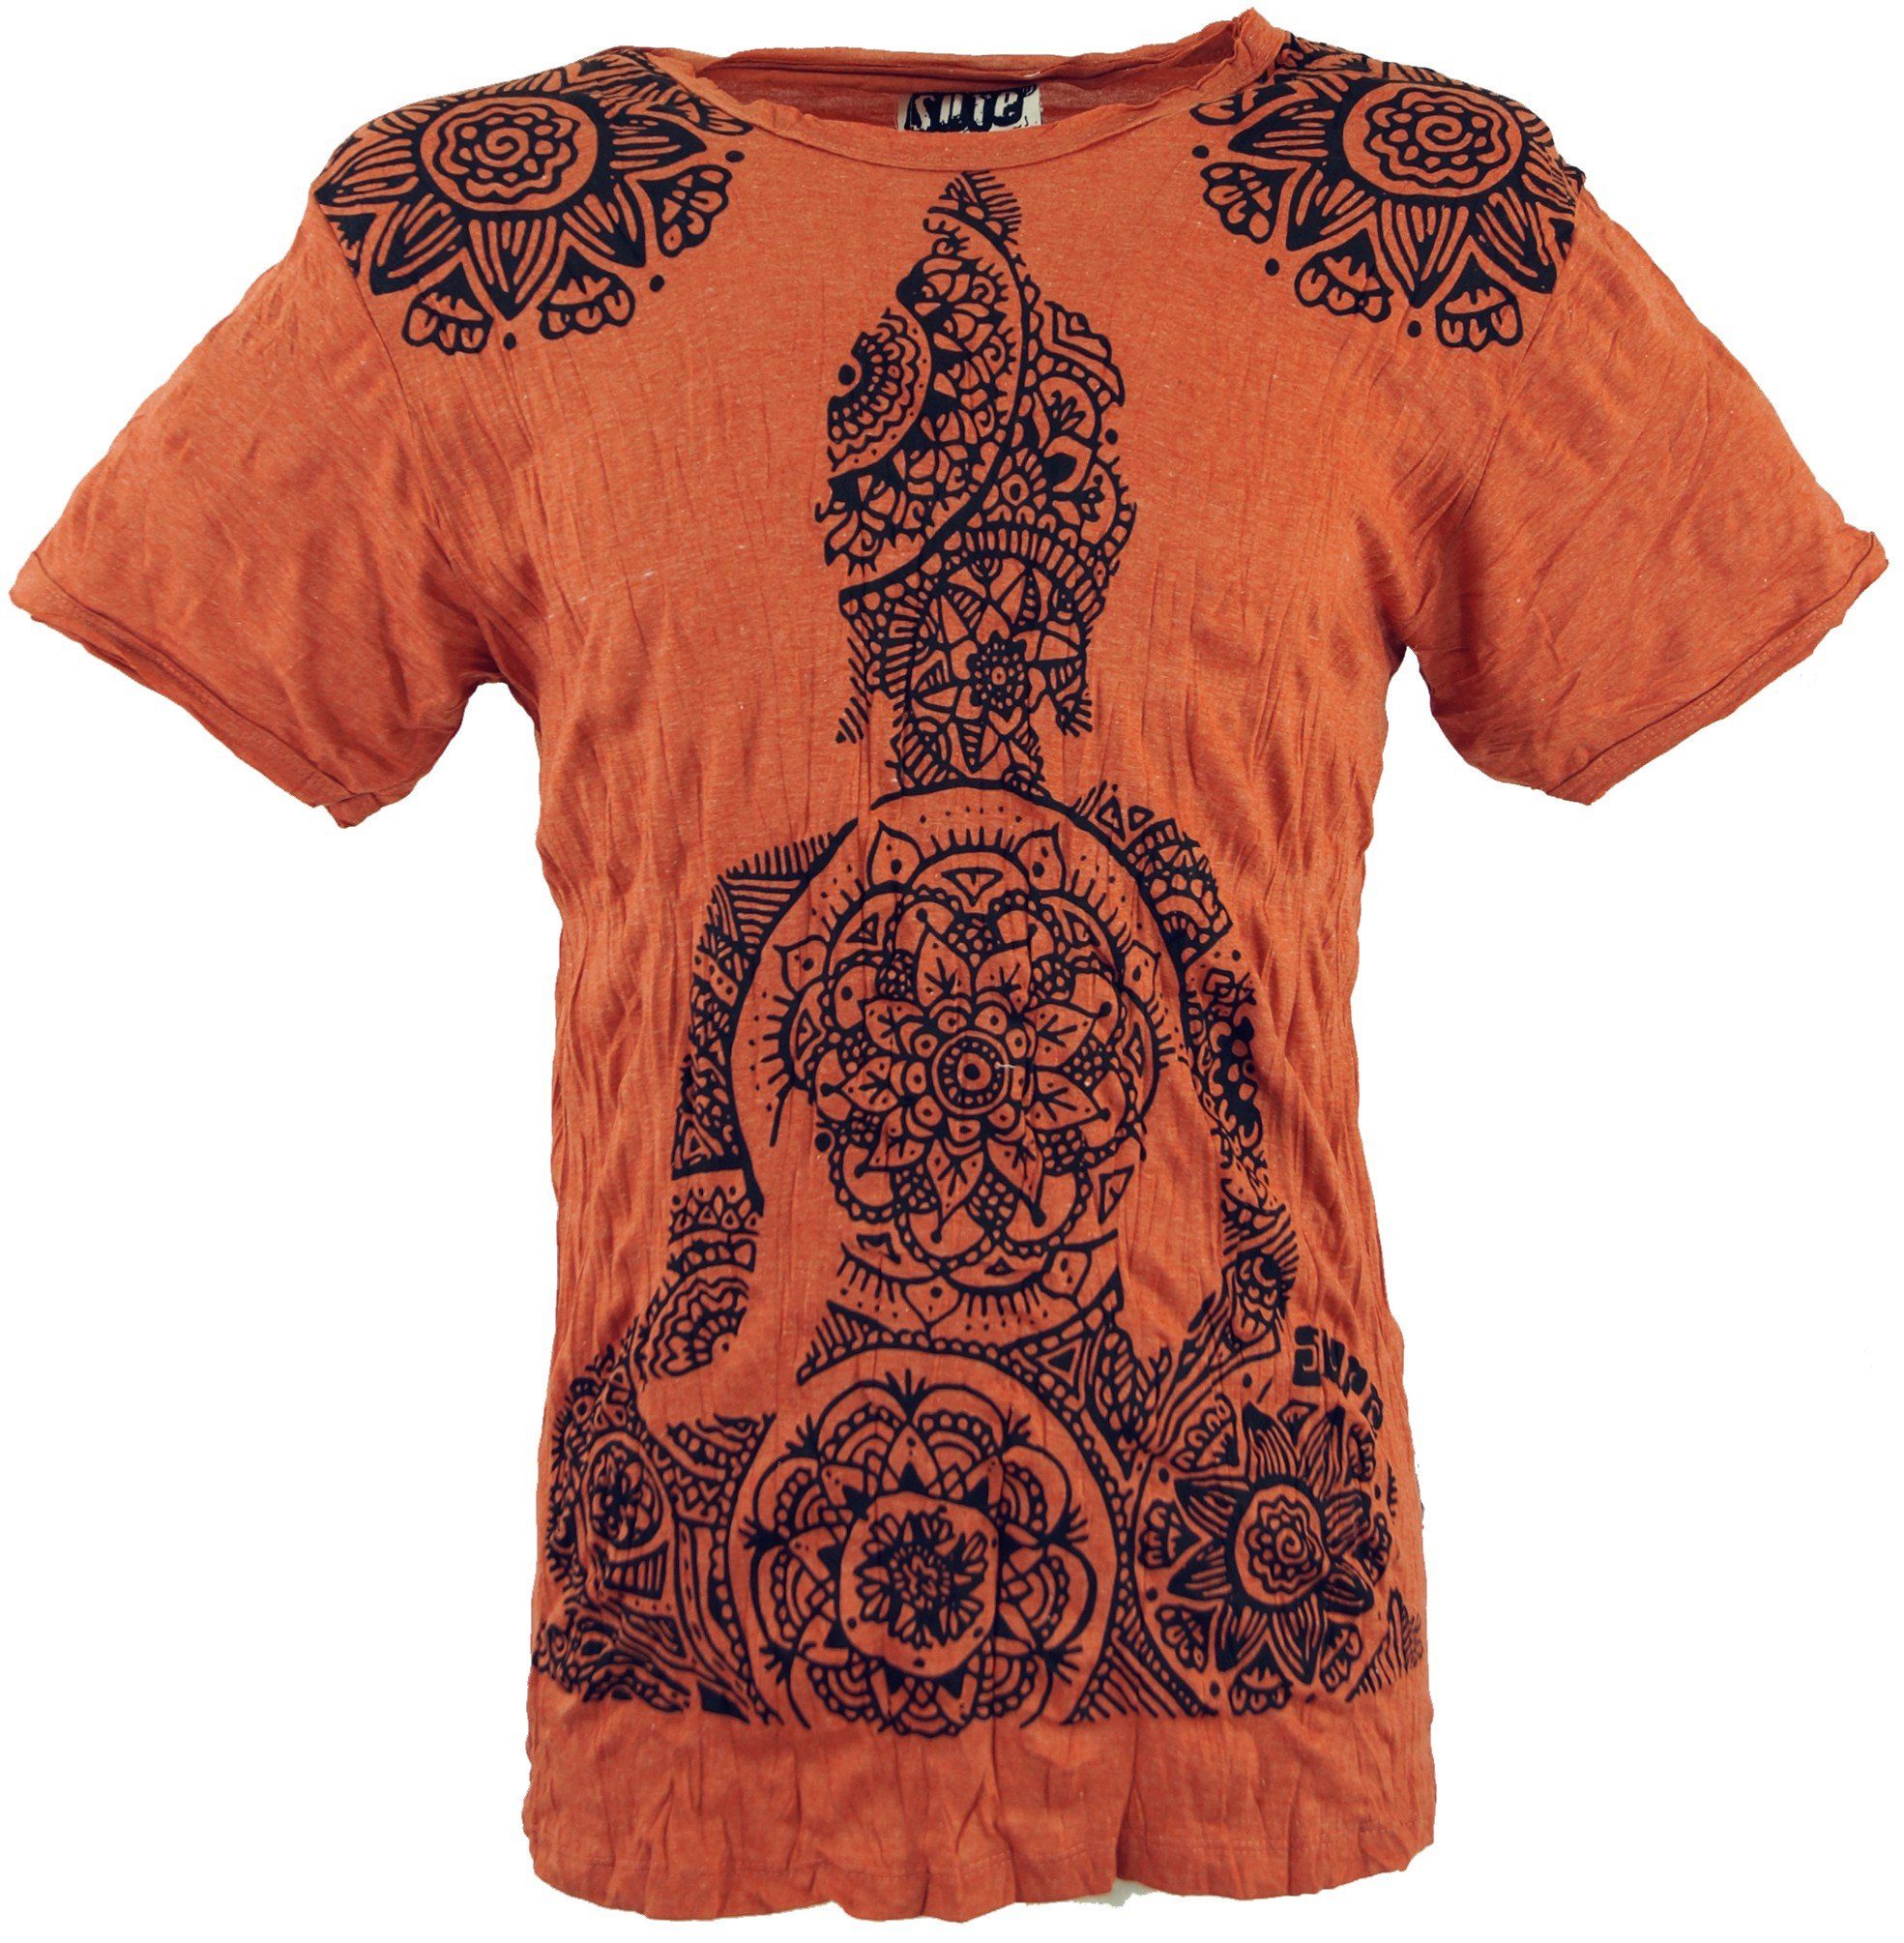 Guru-Shop T-Shirt Sure T-Shirt Mandala Buddha Style, rostorange alternative Goa Bekleidung Festival, 